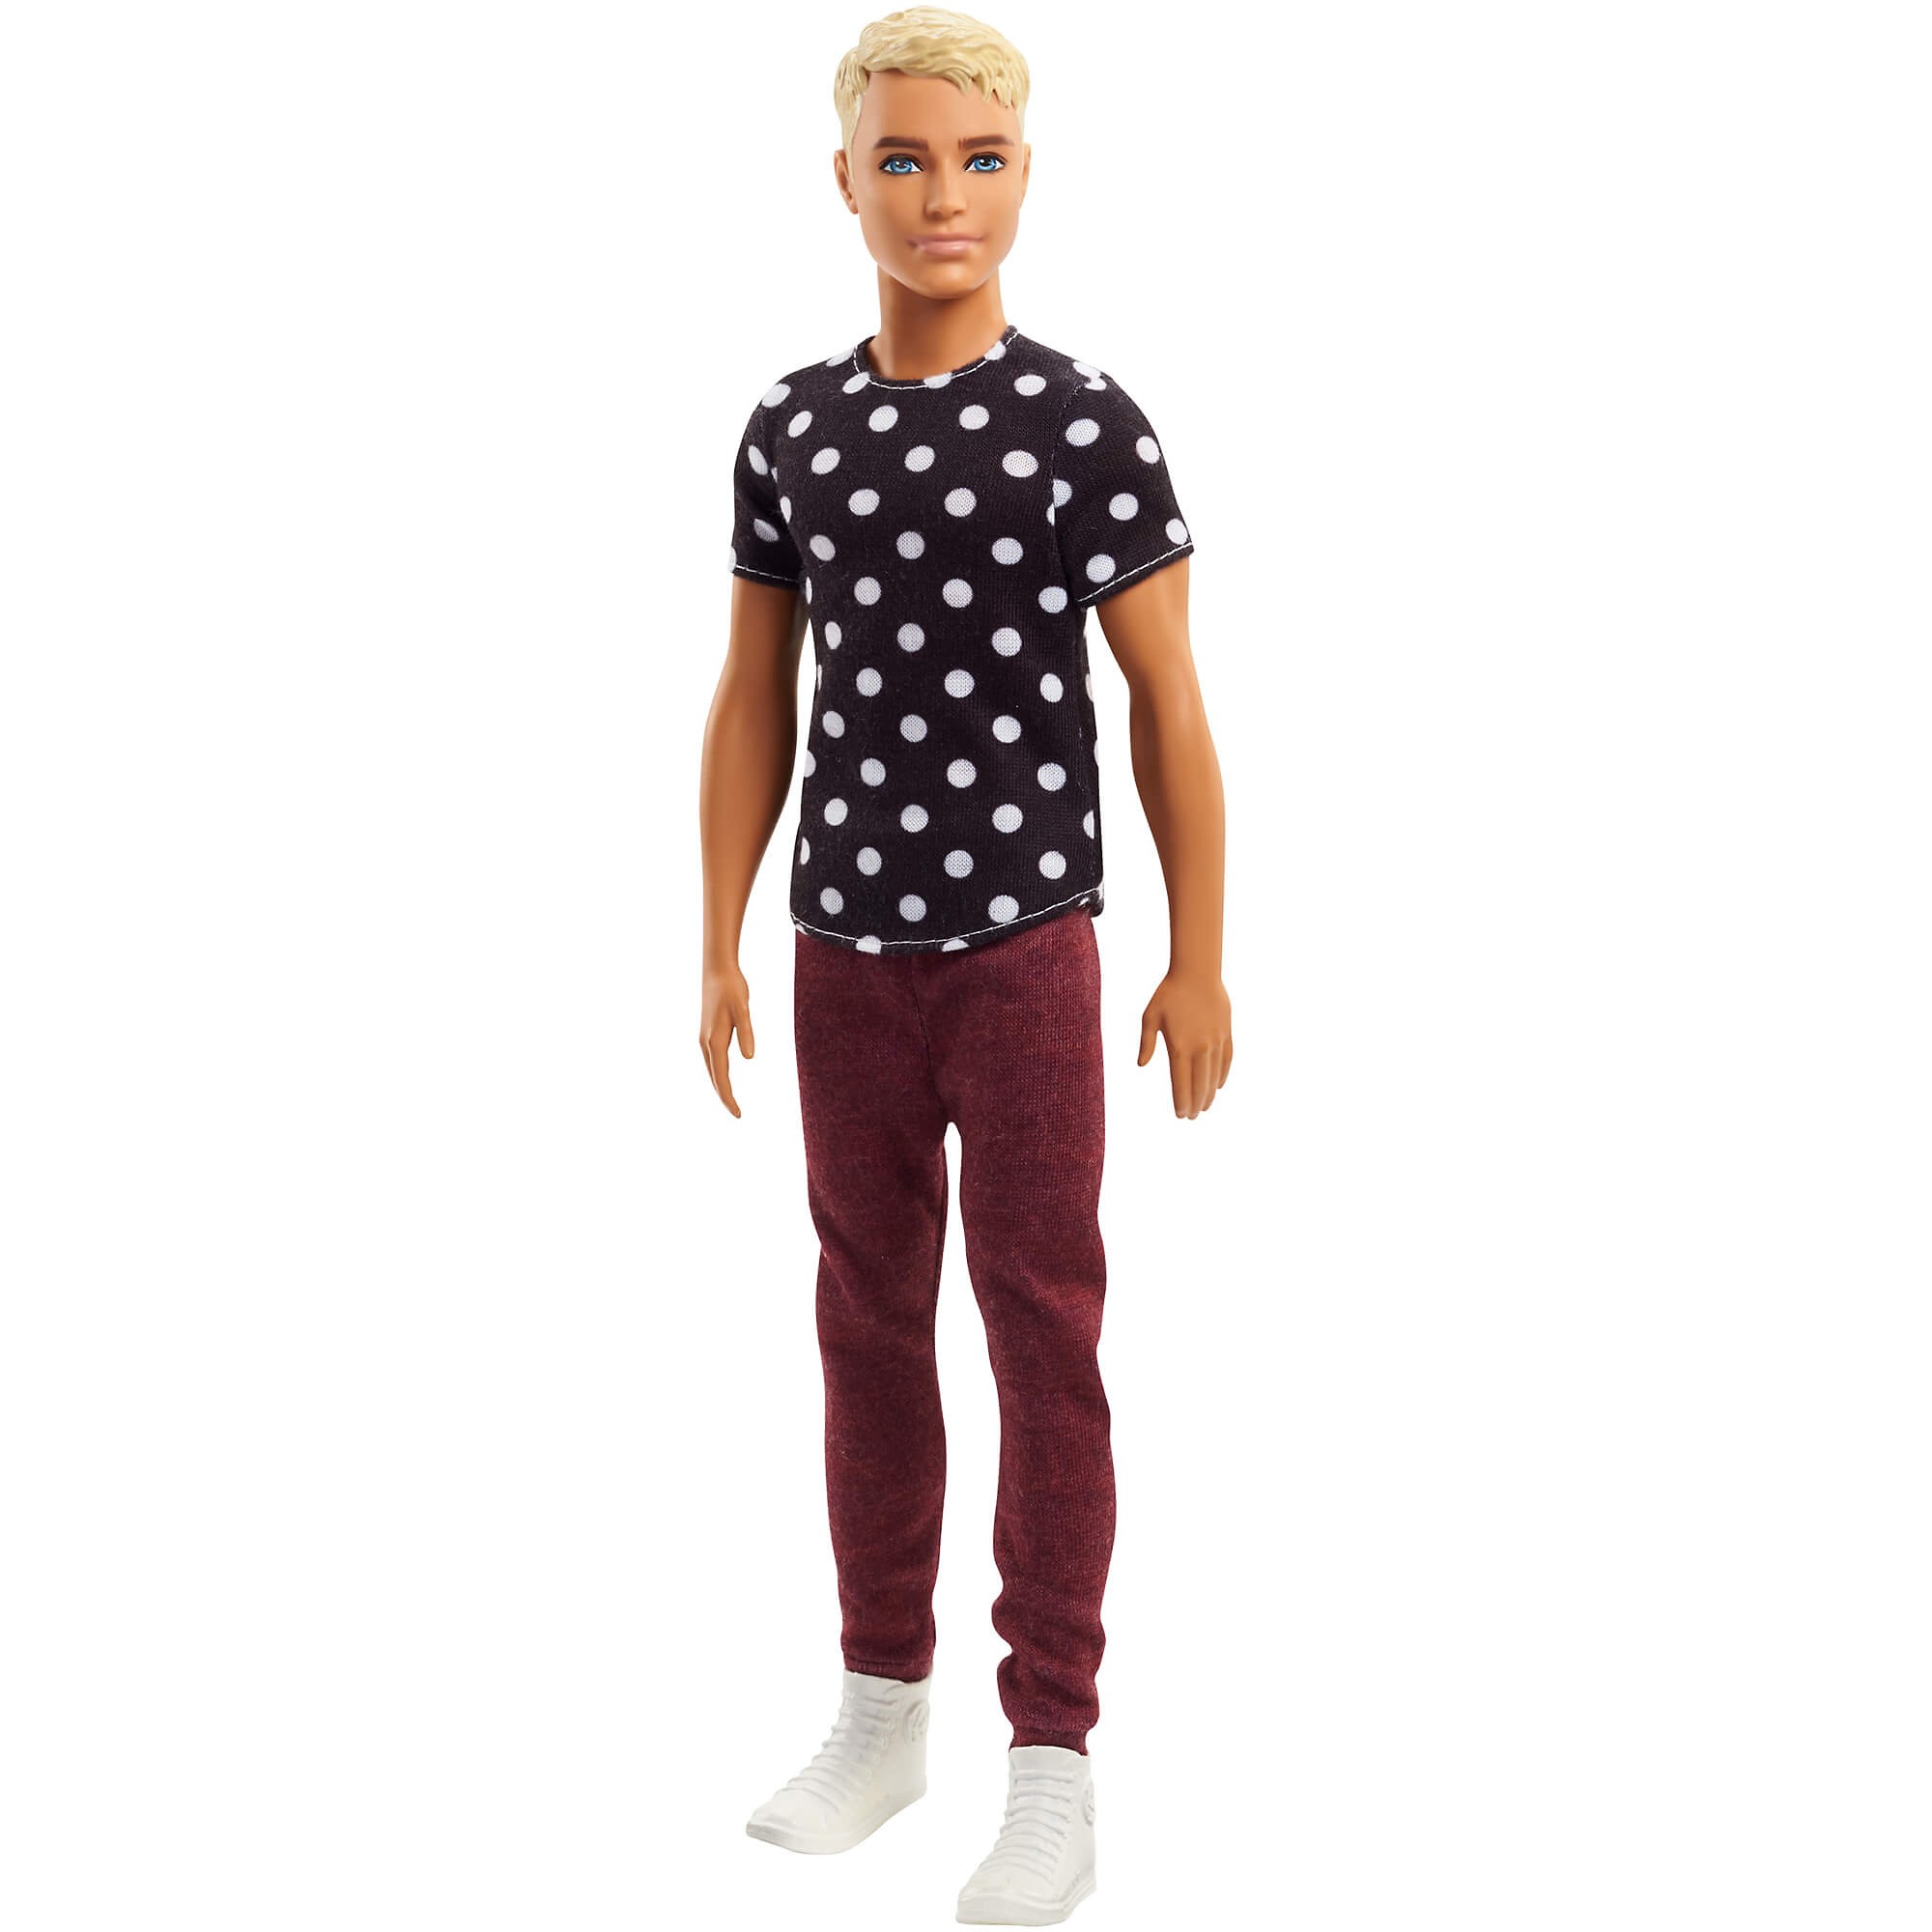 Barbie Fashionistas Ken Doll Wearing Polka Dot Top & Red Pants - image 1 of 5